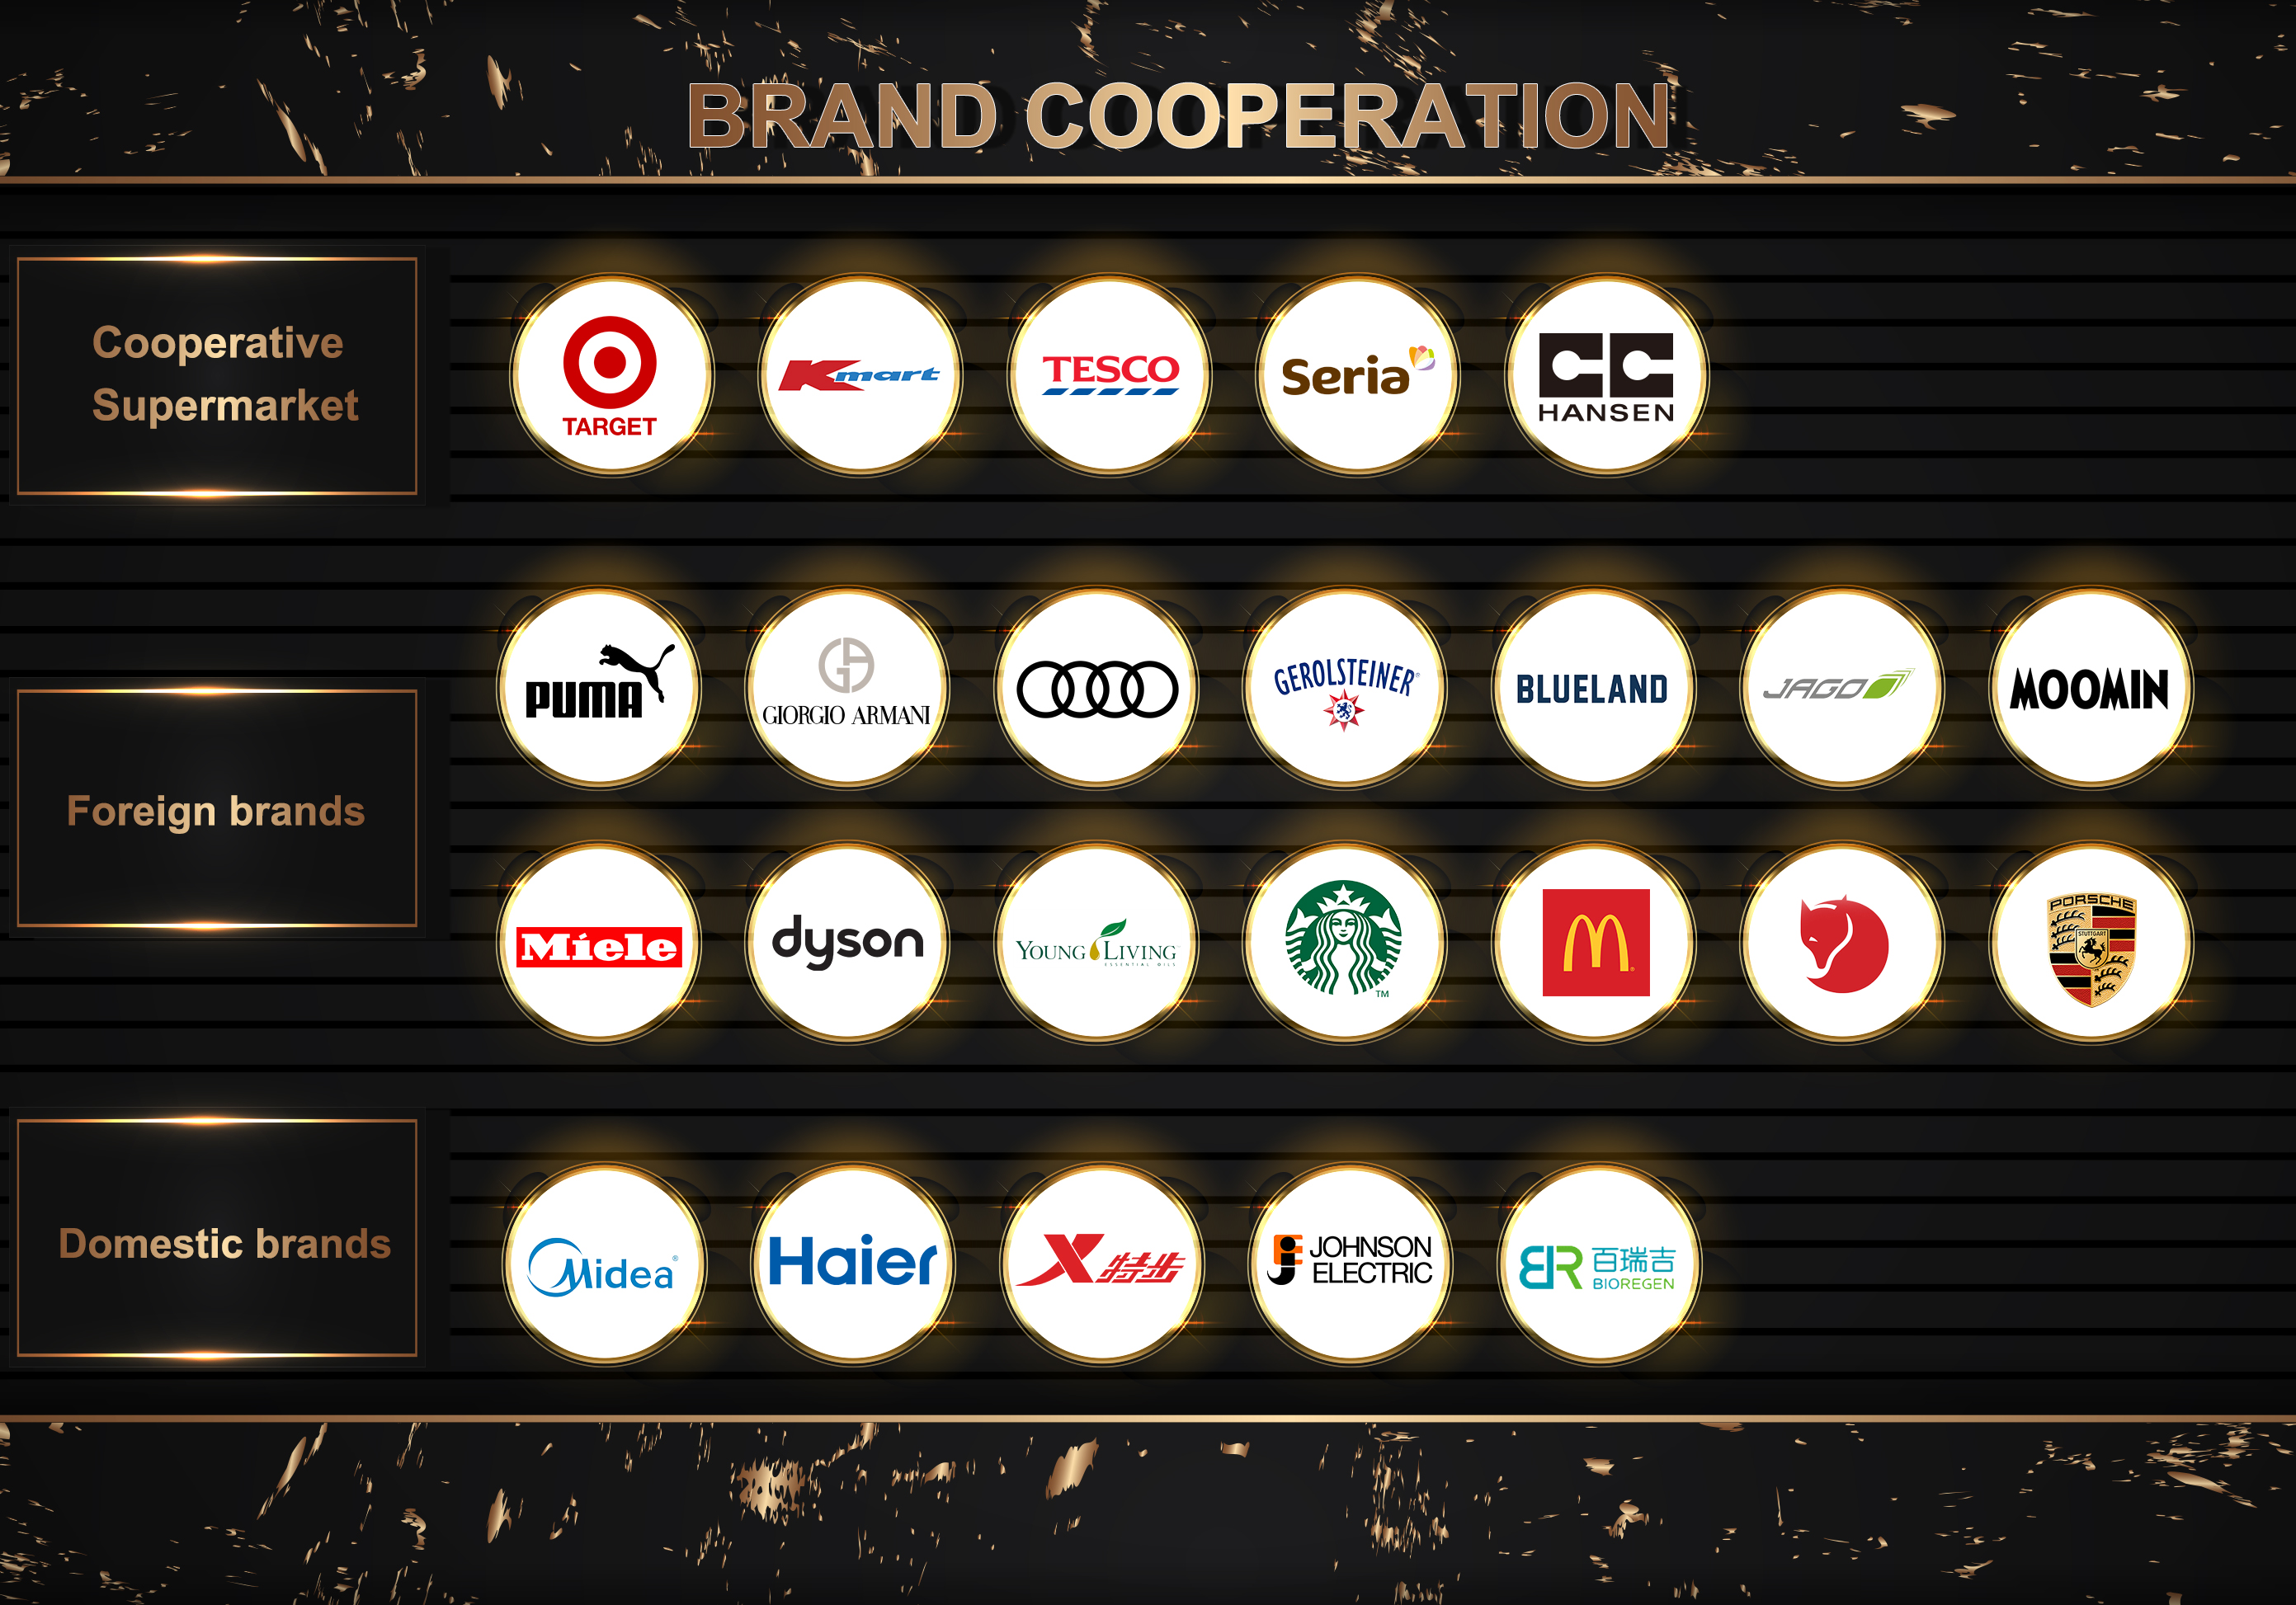 Cooperative brands